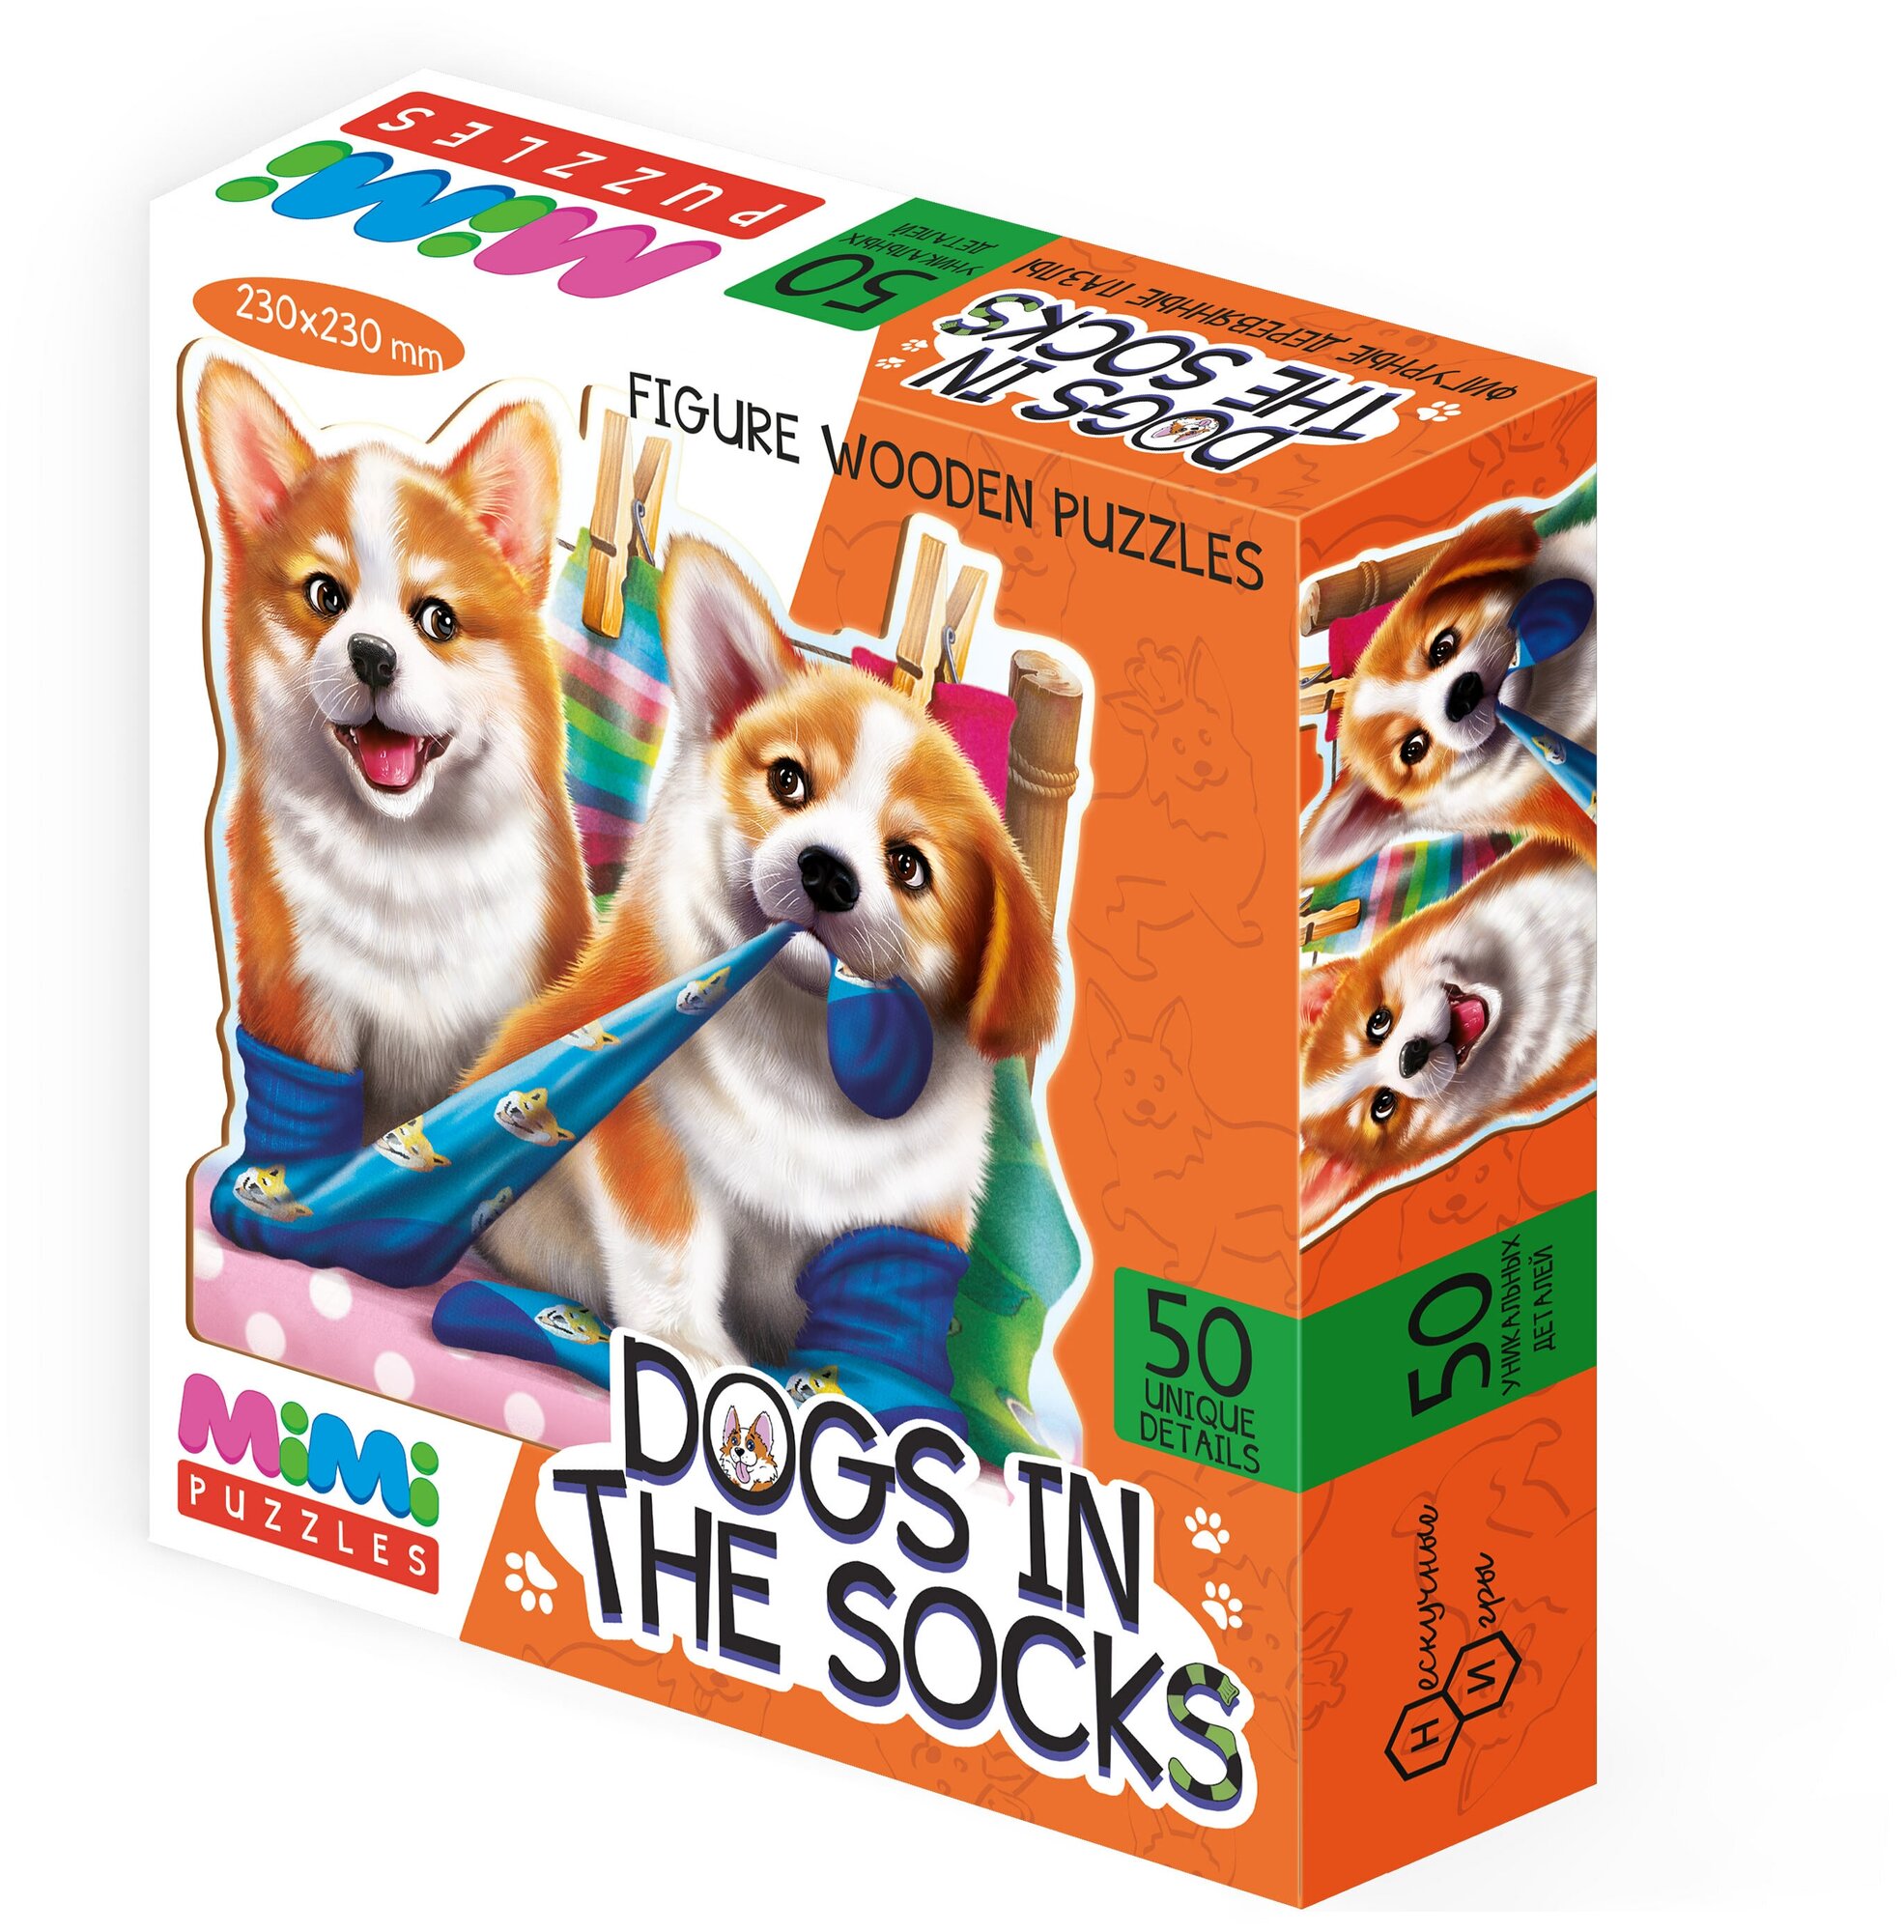 MIMI Puzzles Фигурный деревянный пазл "DOGS IN THE SOCKS"